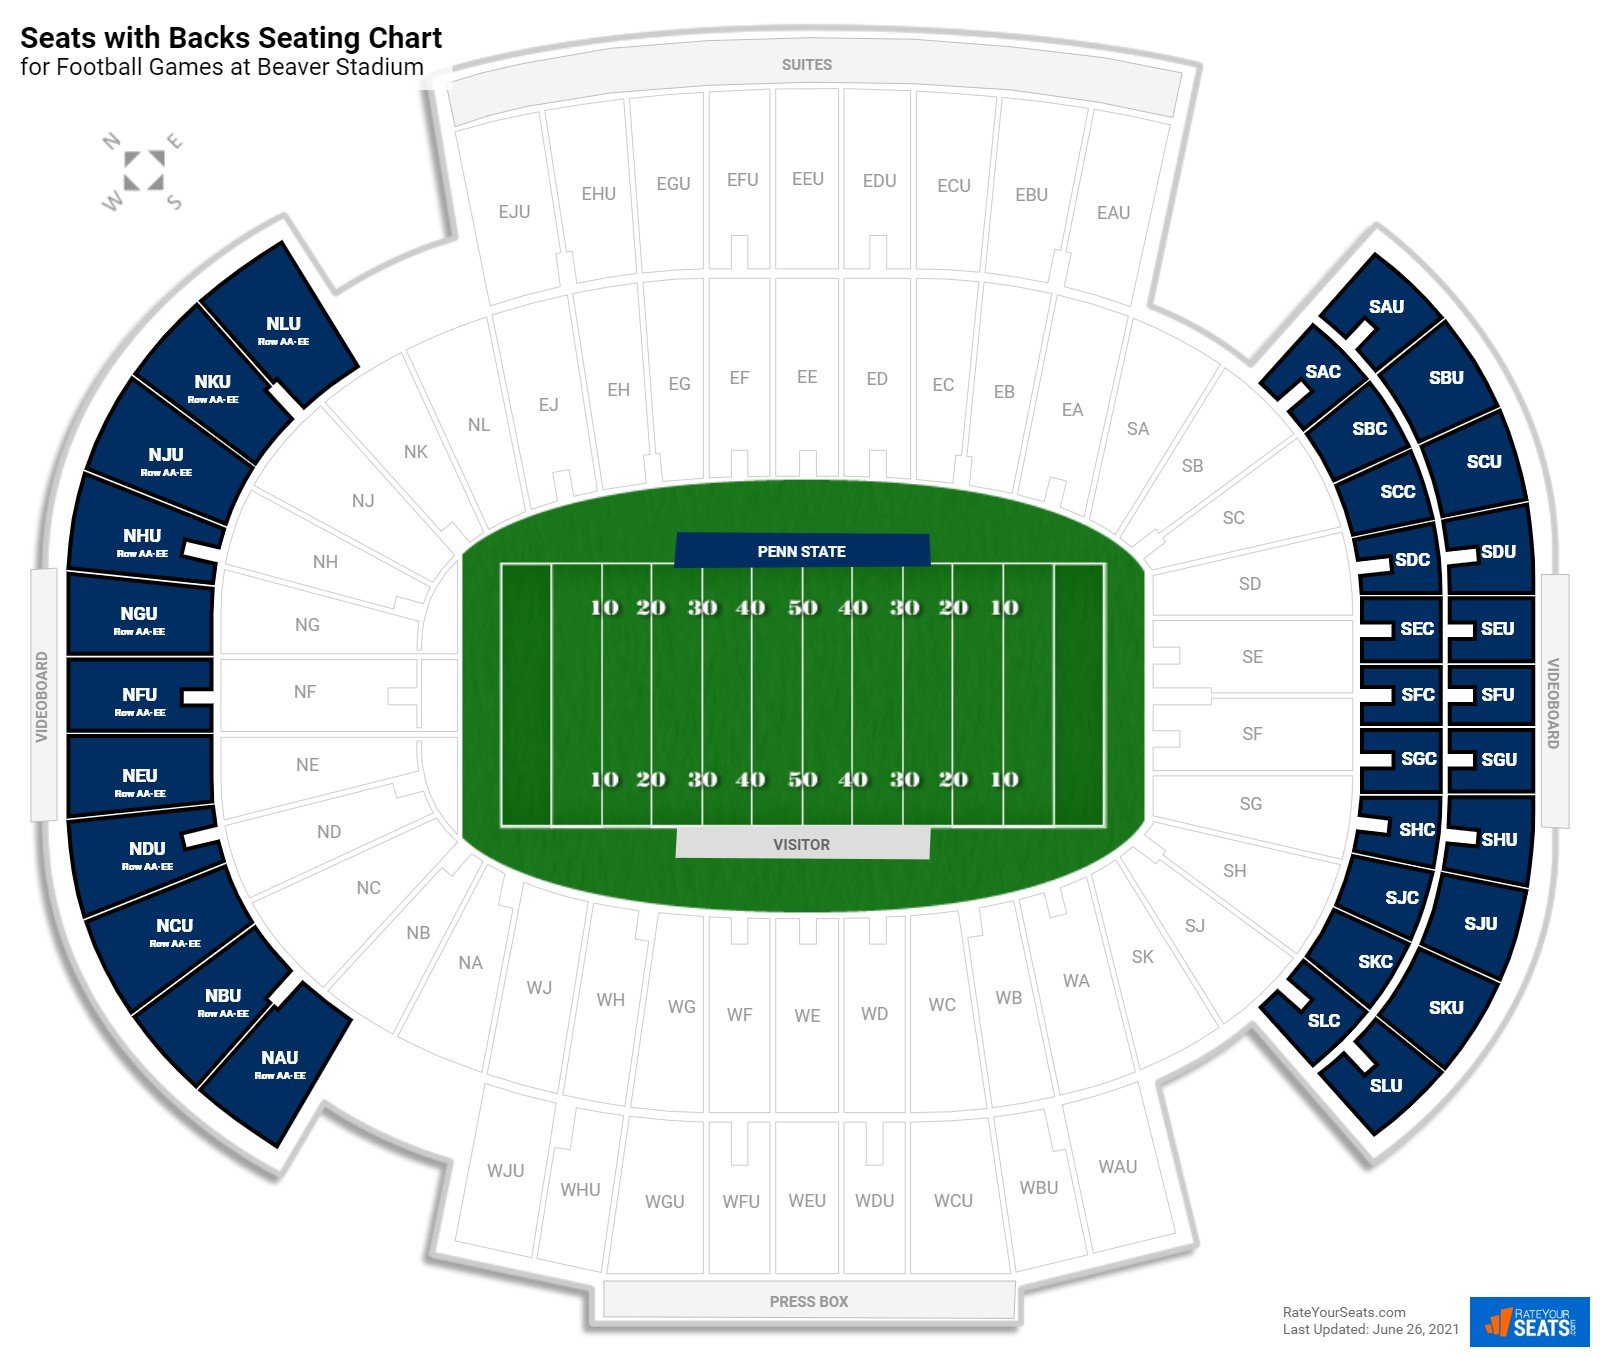 Football Seats with Backs Seating Chart at Beaver Stadium